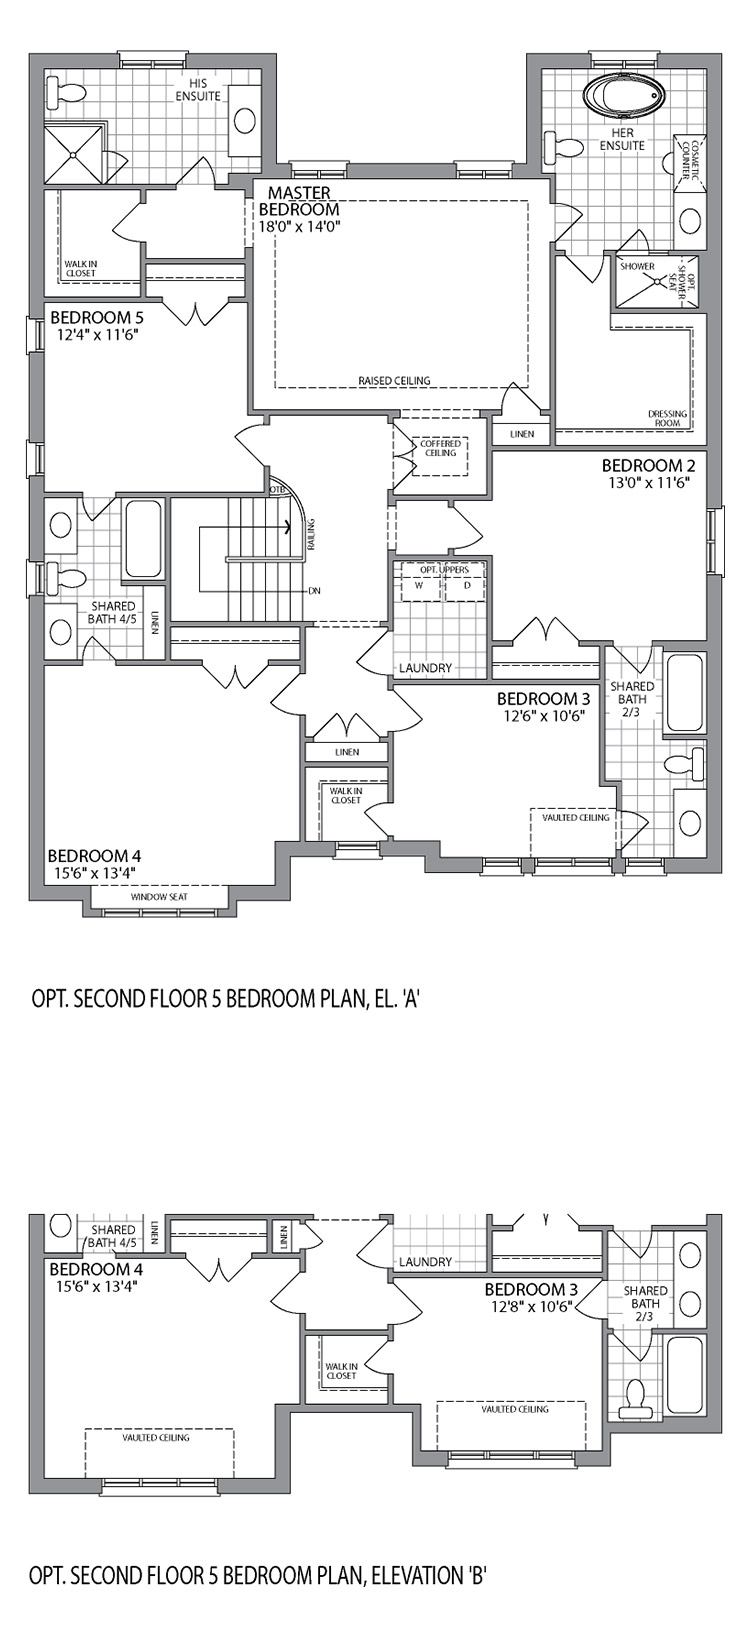 Optional Second Floor 5 bedroom Plan, EL. A & B